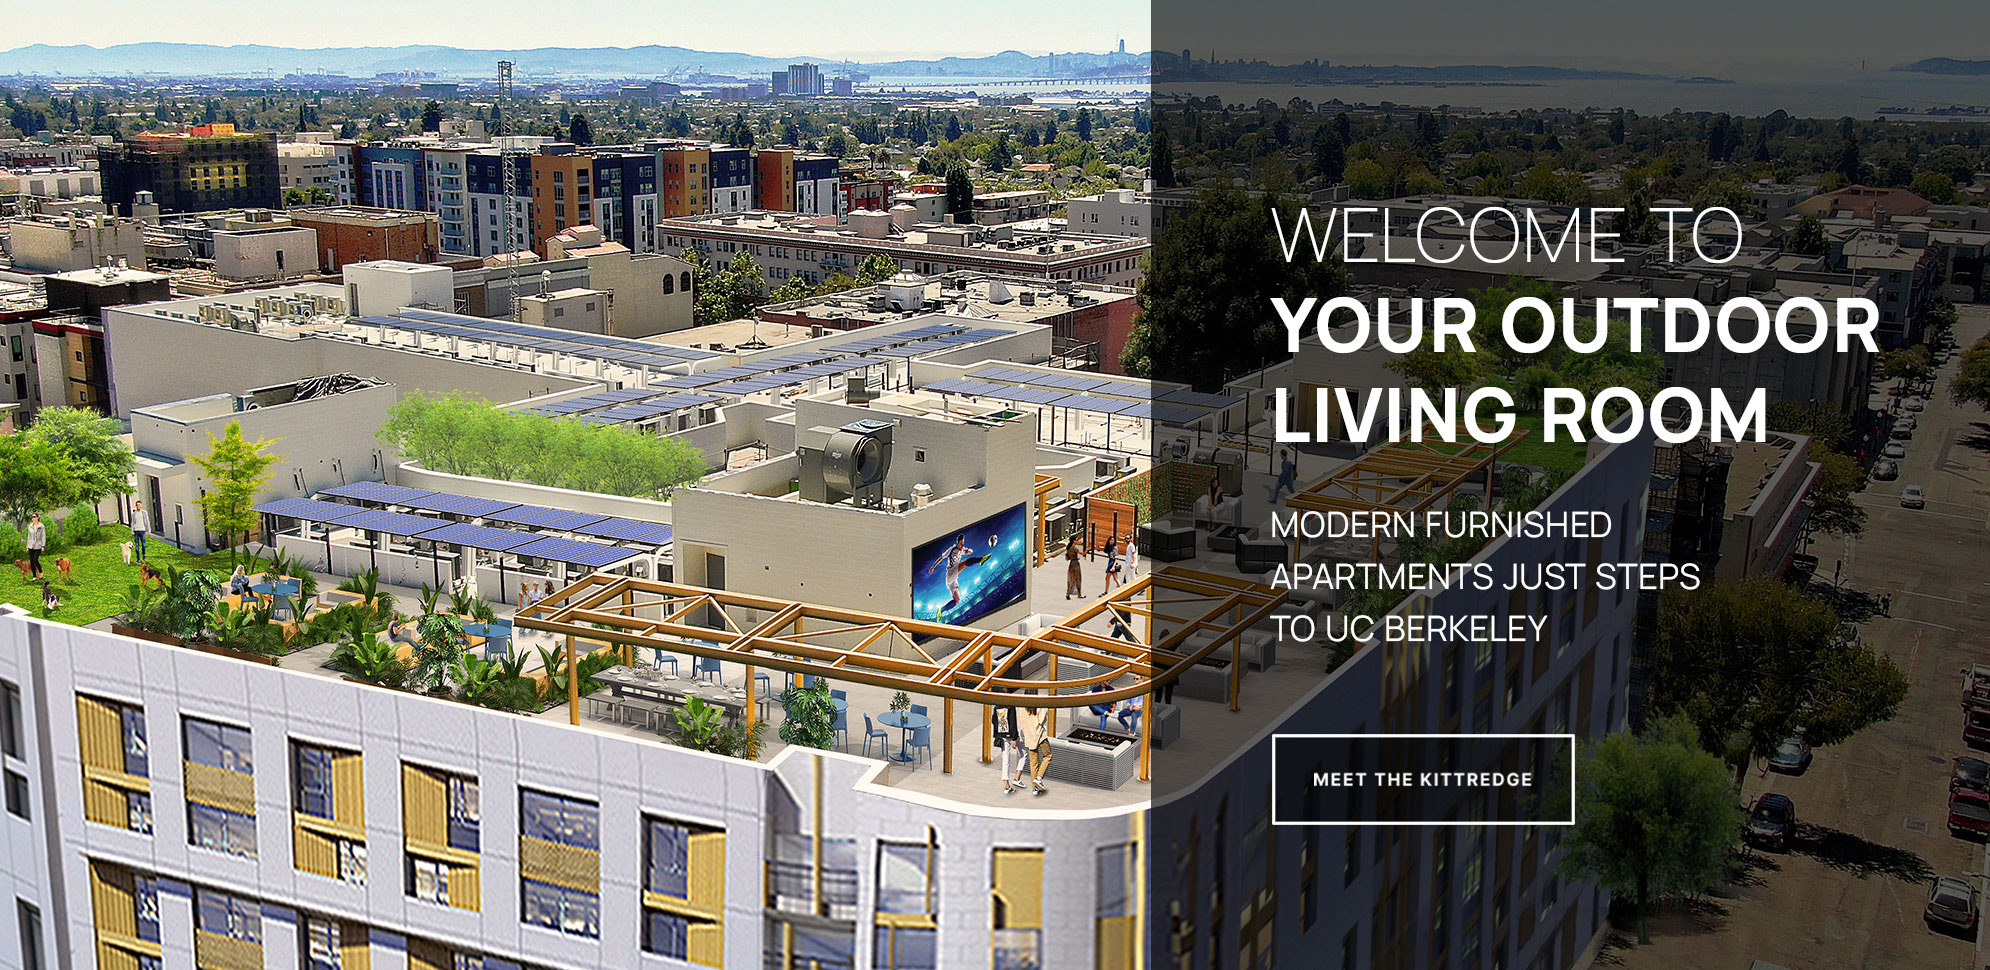 Berkeley Housing development